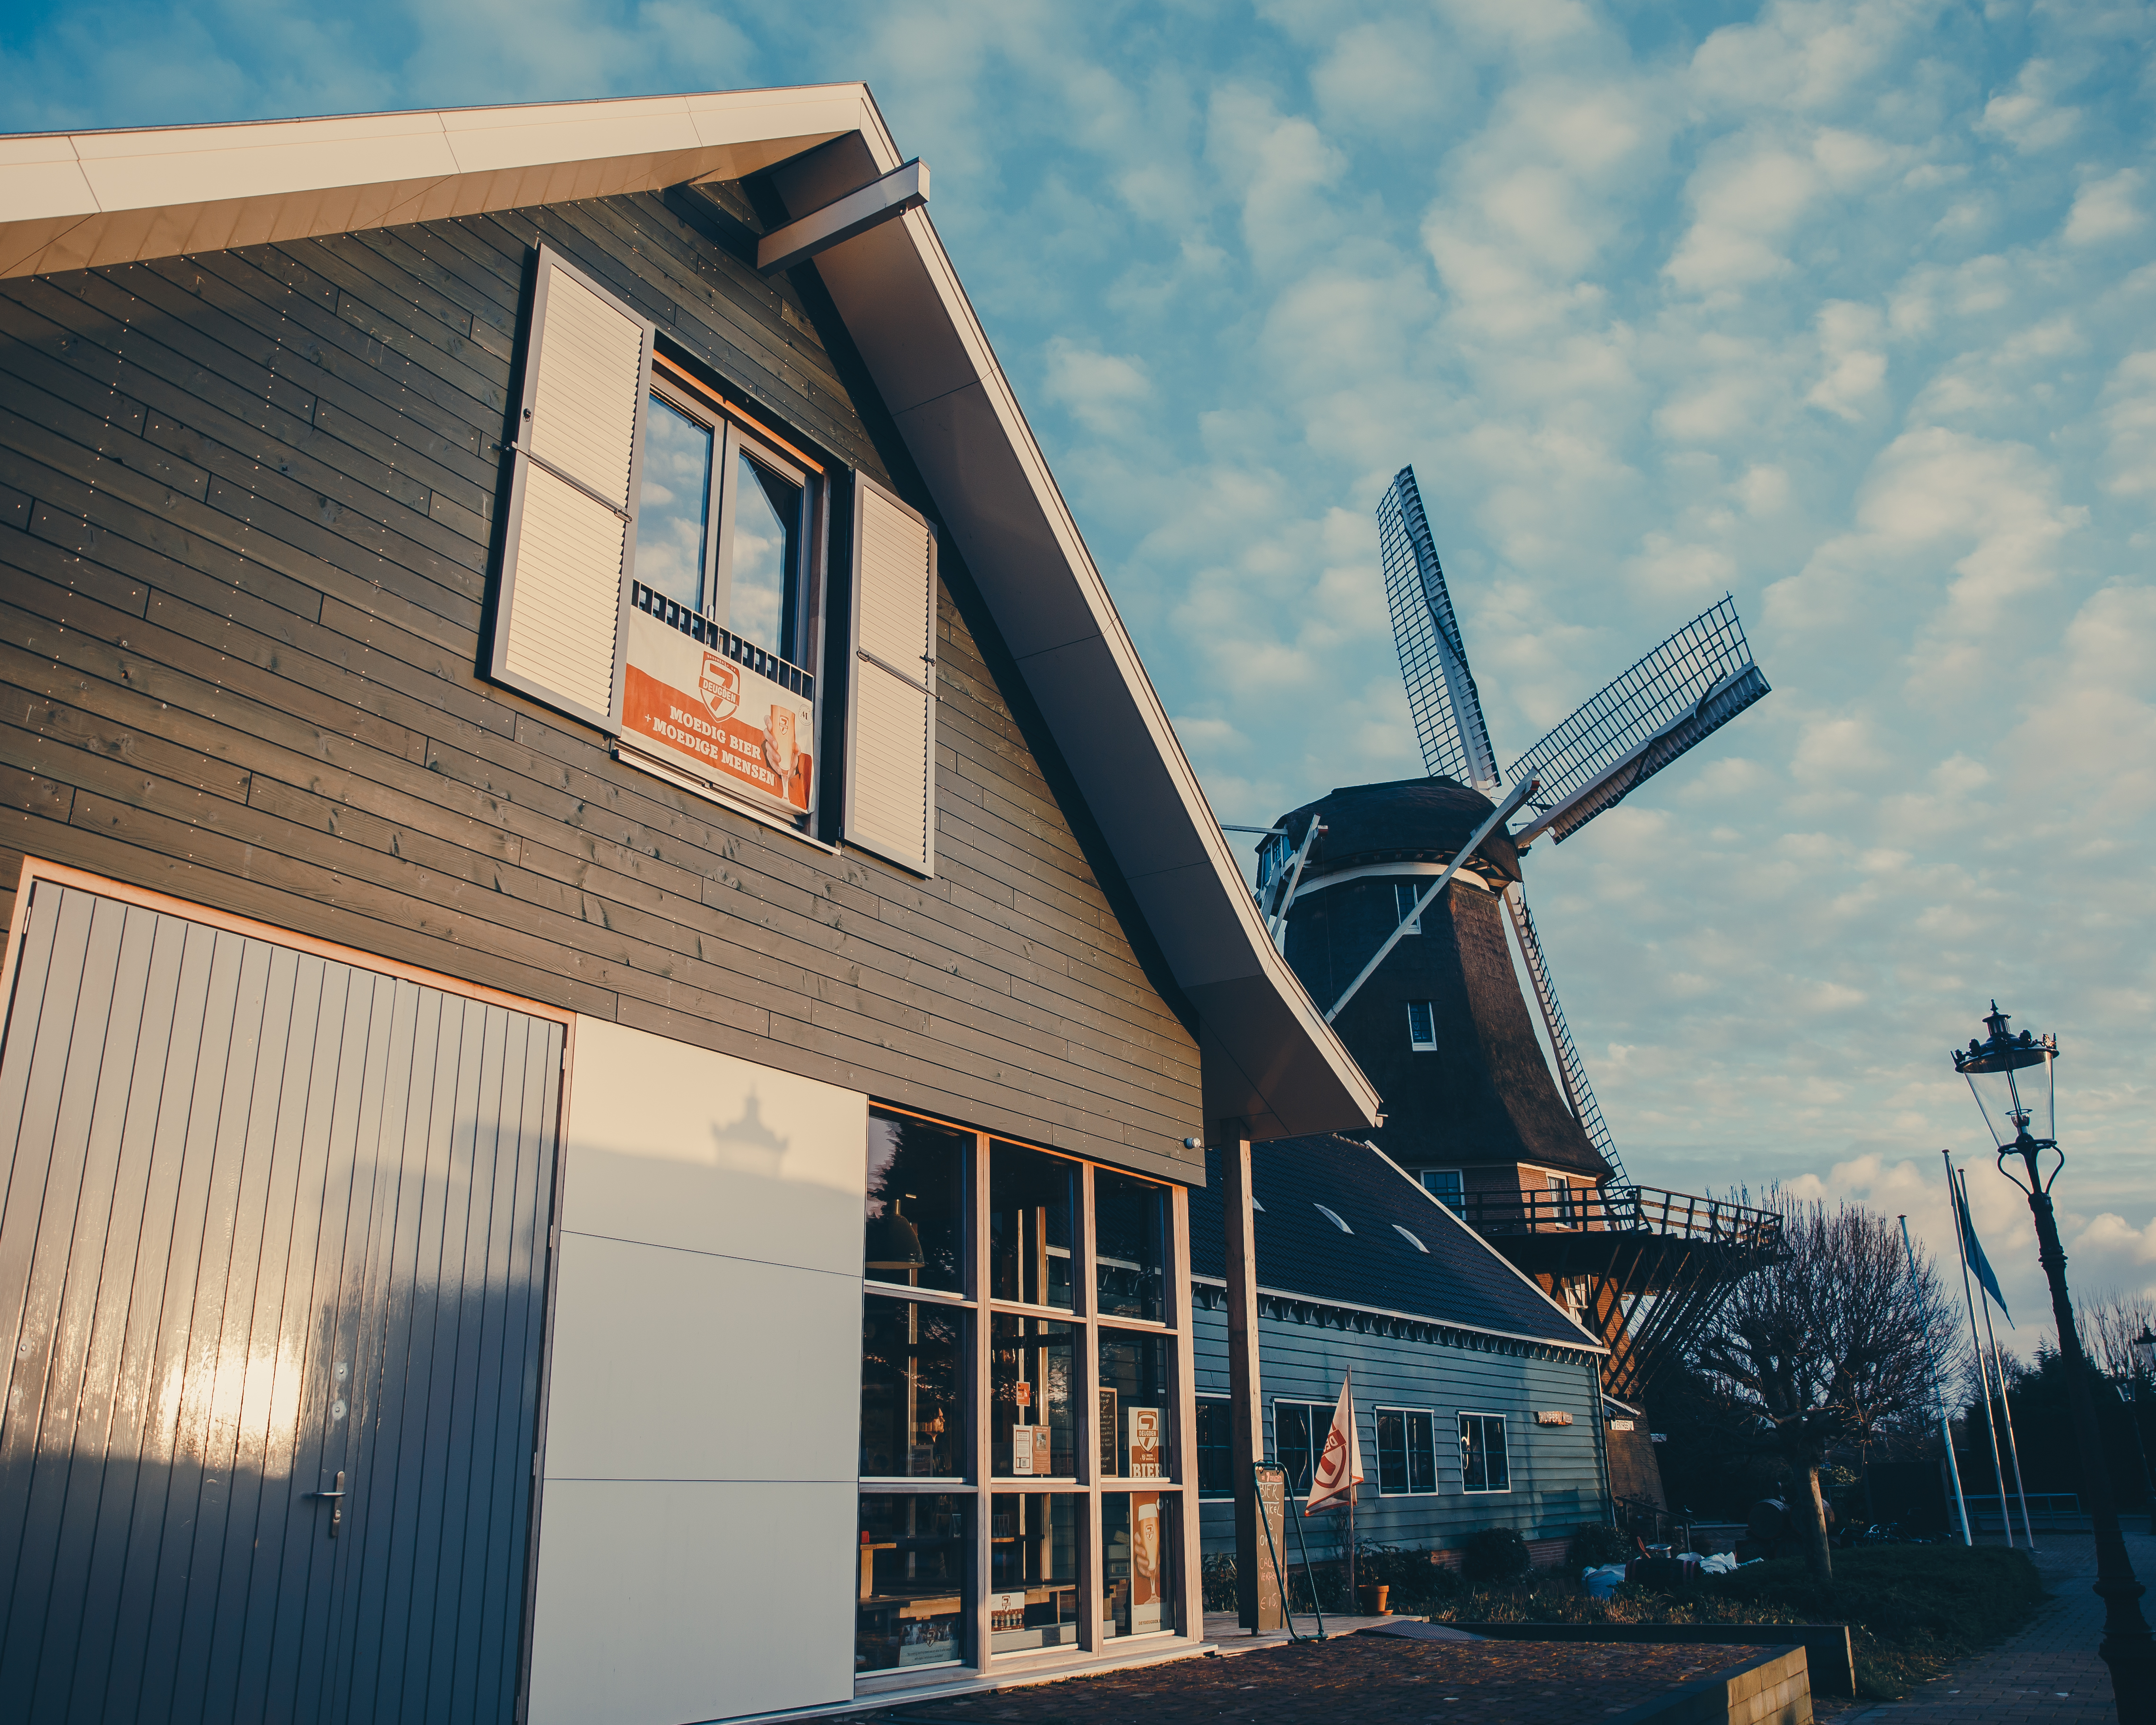 Windmill Amsterdam Sloten & Brouwerij De 7 Deugden - Amsterdam - 